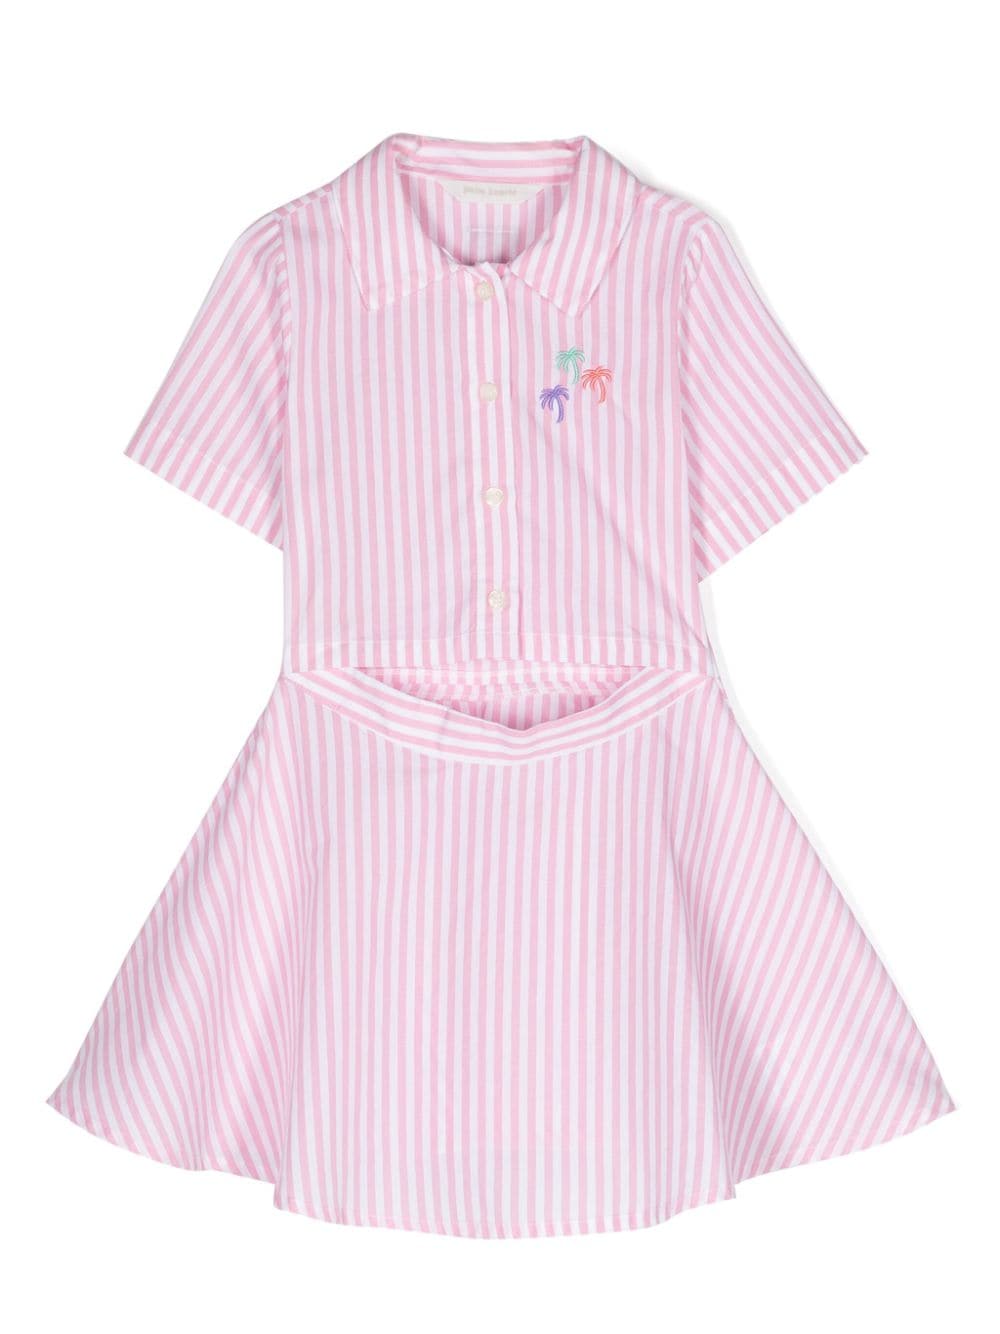 Palm Angels Kids Palms striped shirt dress - Pink von Palm Angels Kids